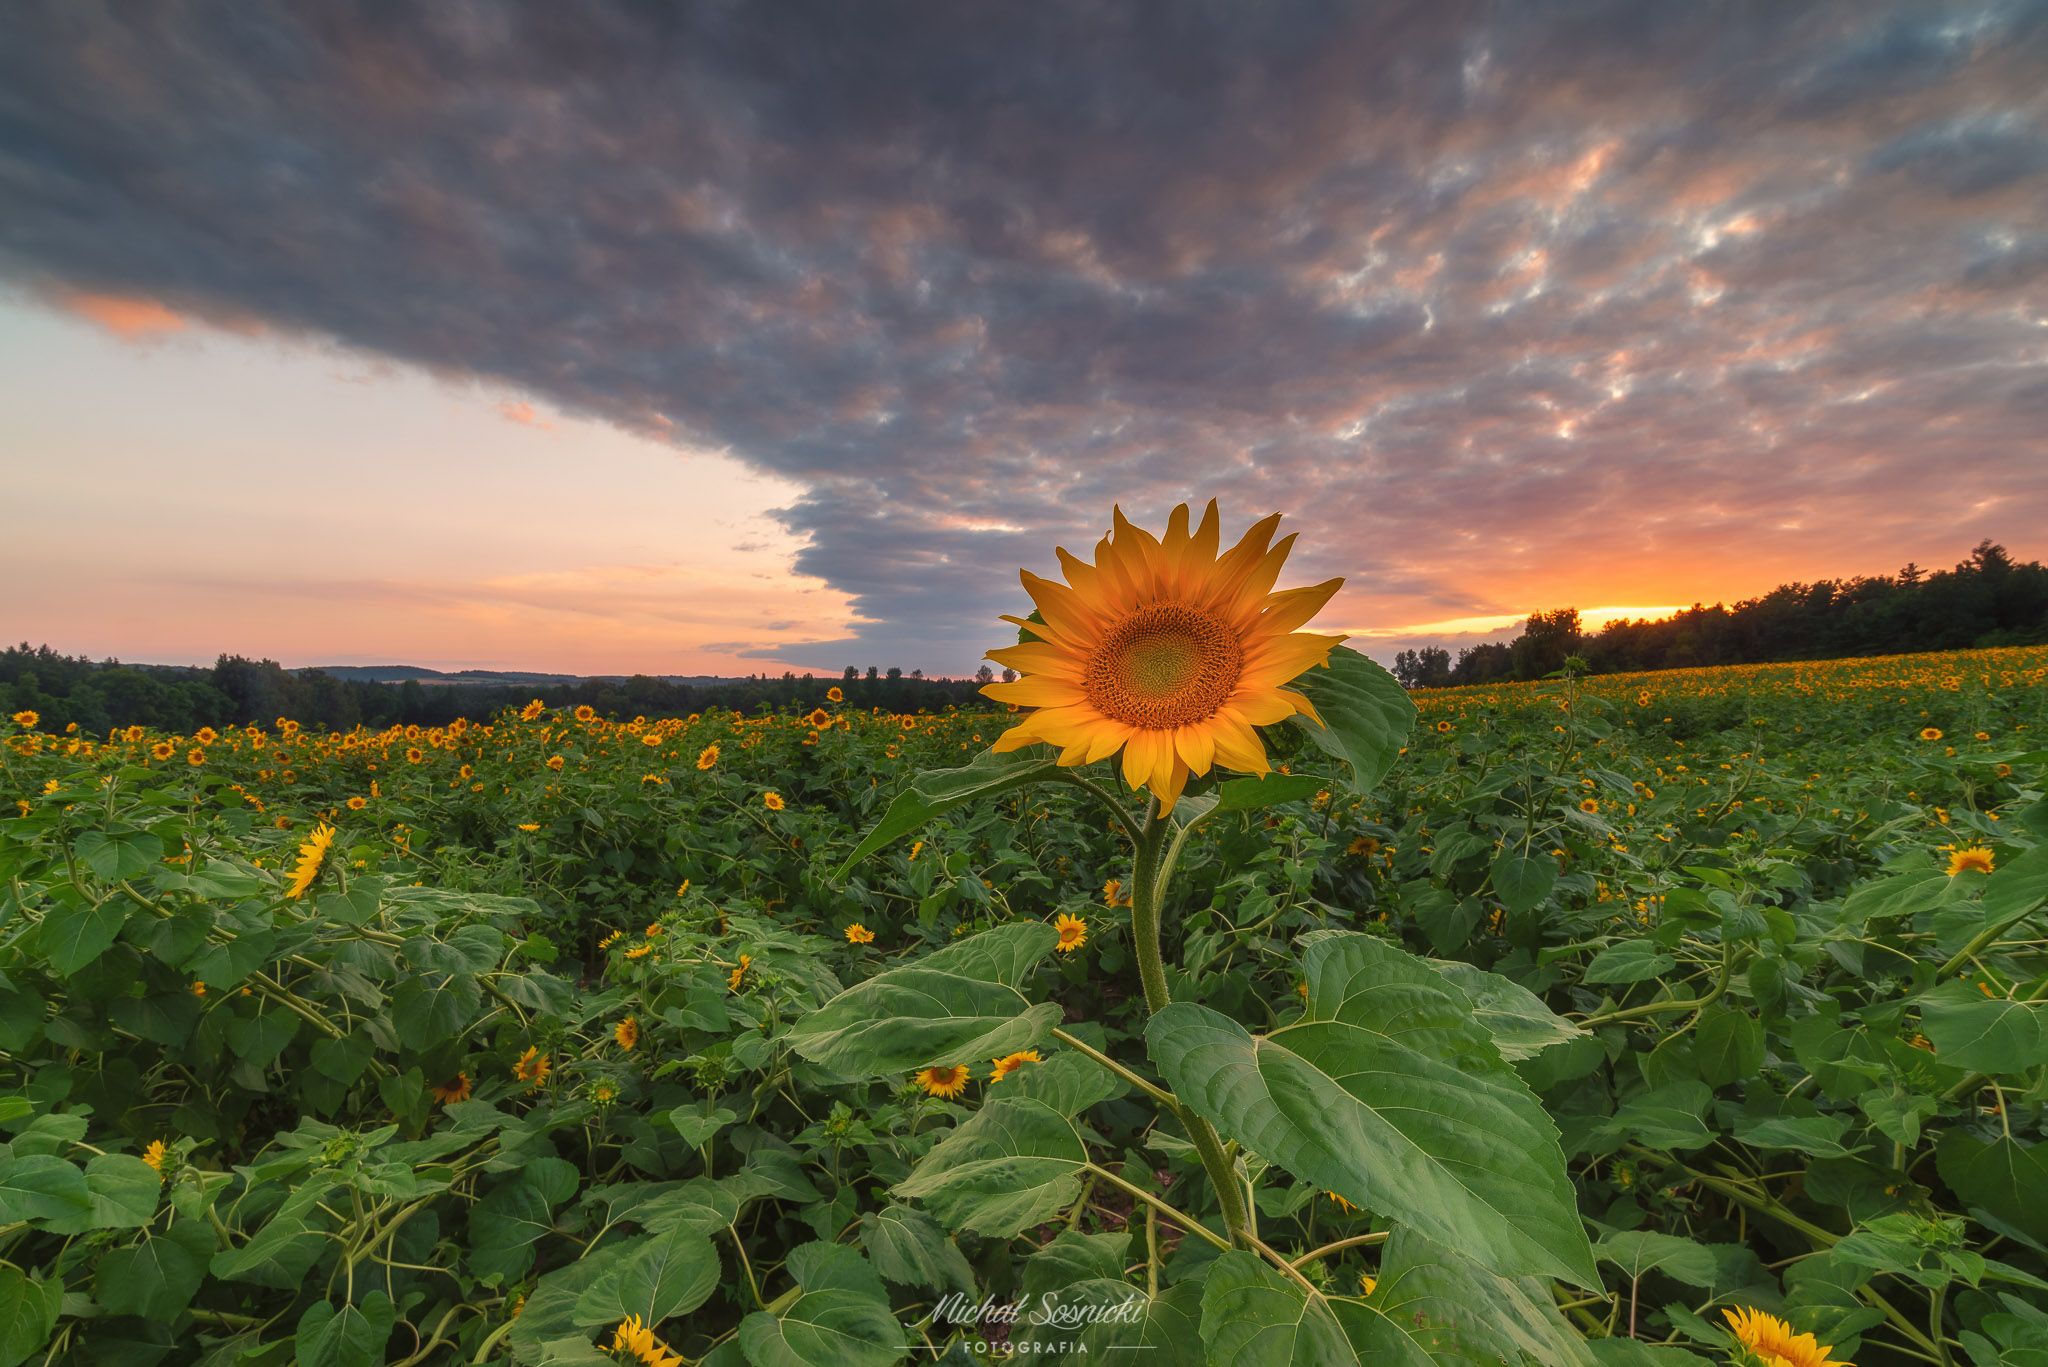 #sunflower #sunflowers #sunset #sky #flower #flowers #sky #poland #summer, Michał Sośnicki